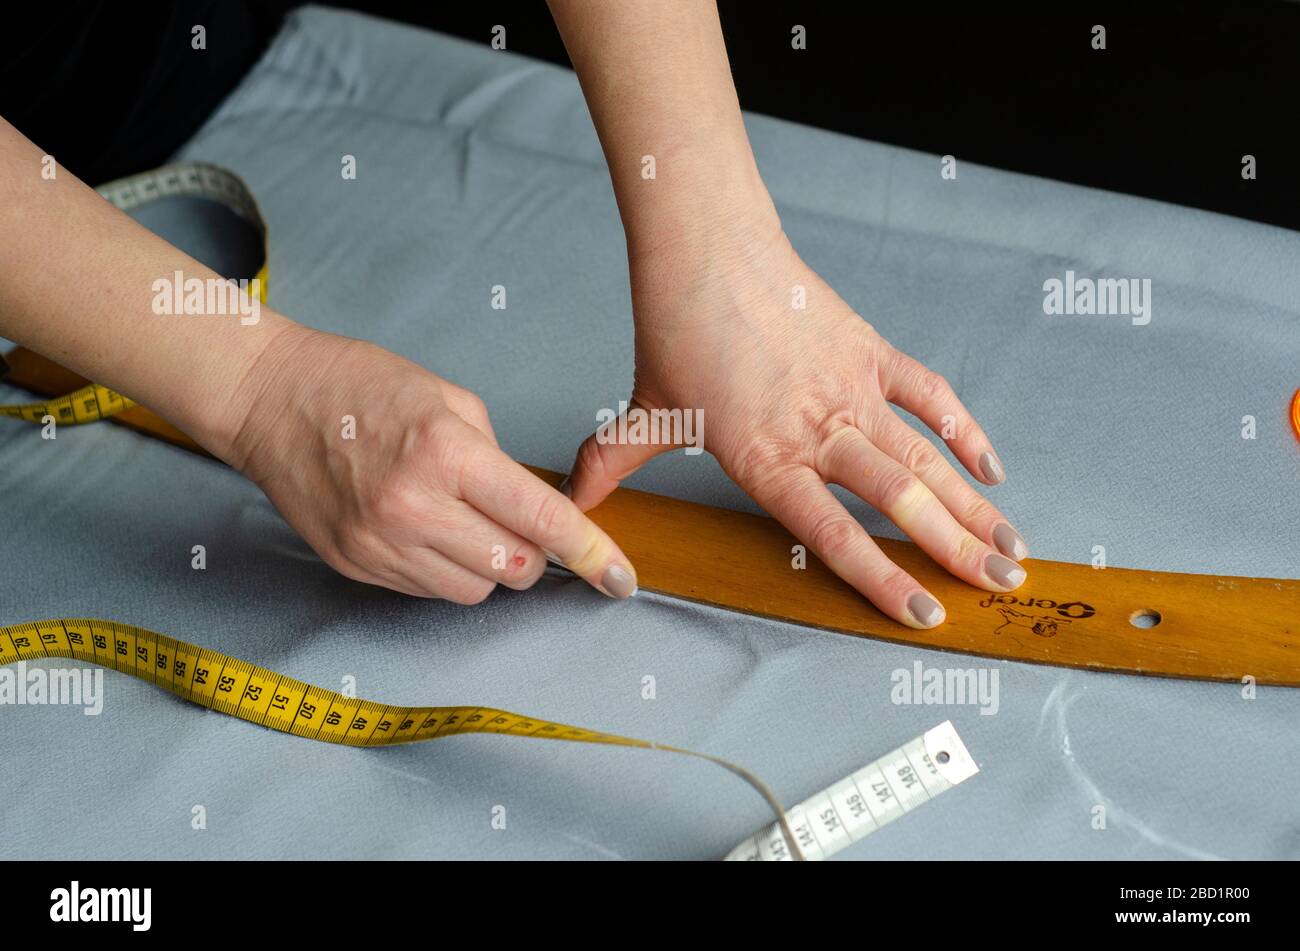 Seamstress using measuring tape Stock Photo by DC_Studio